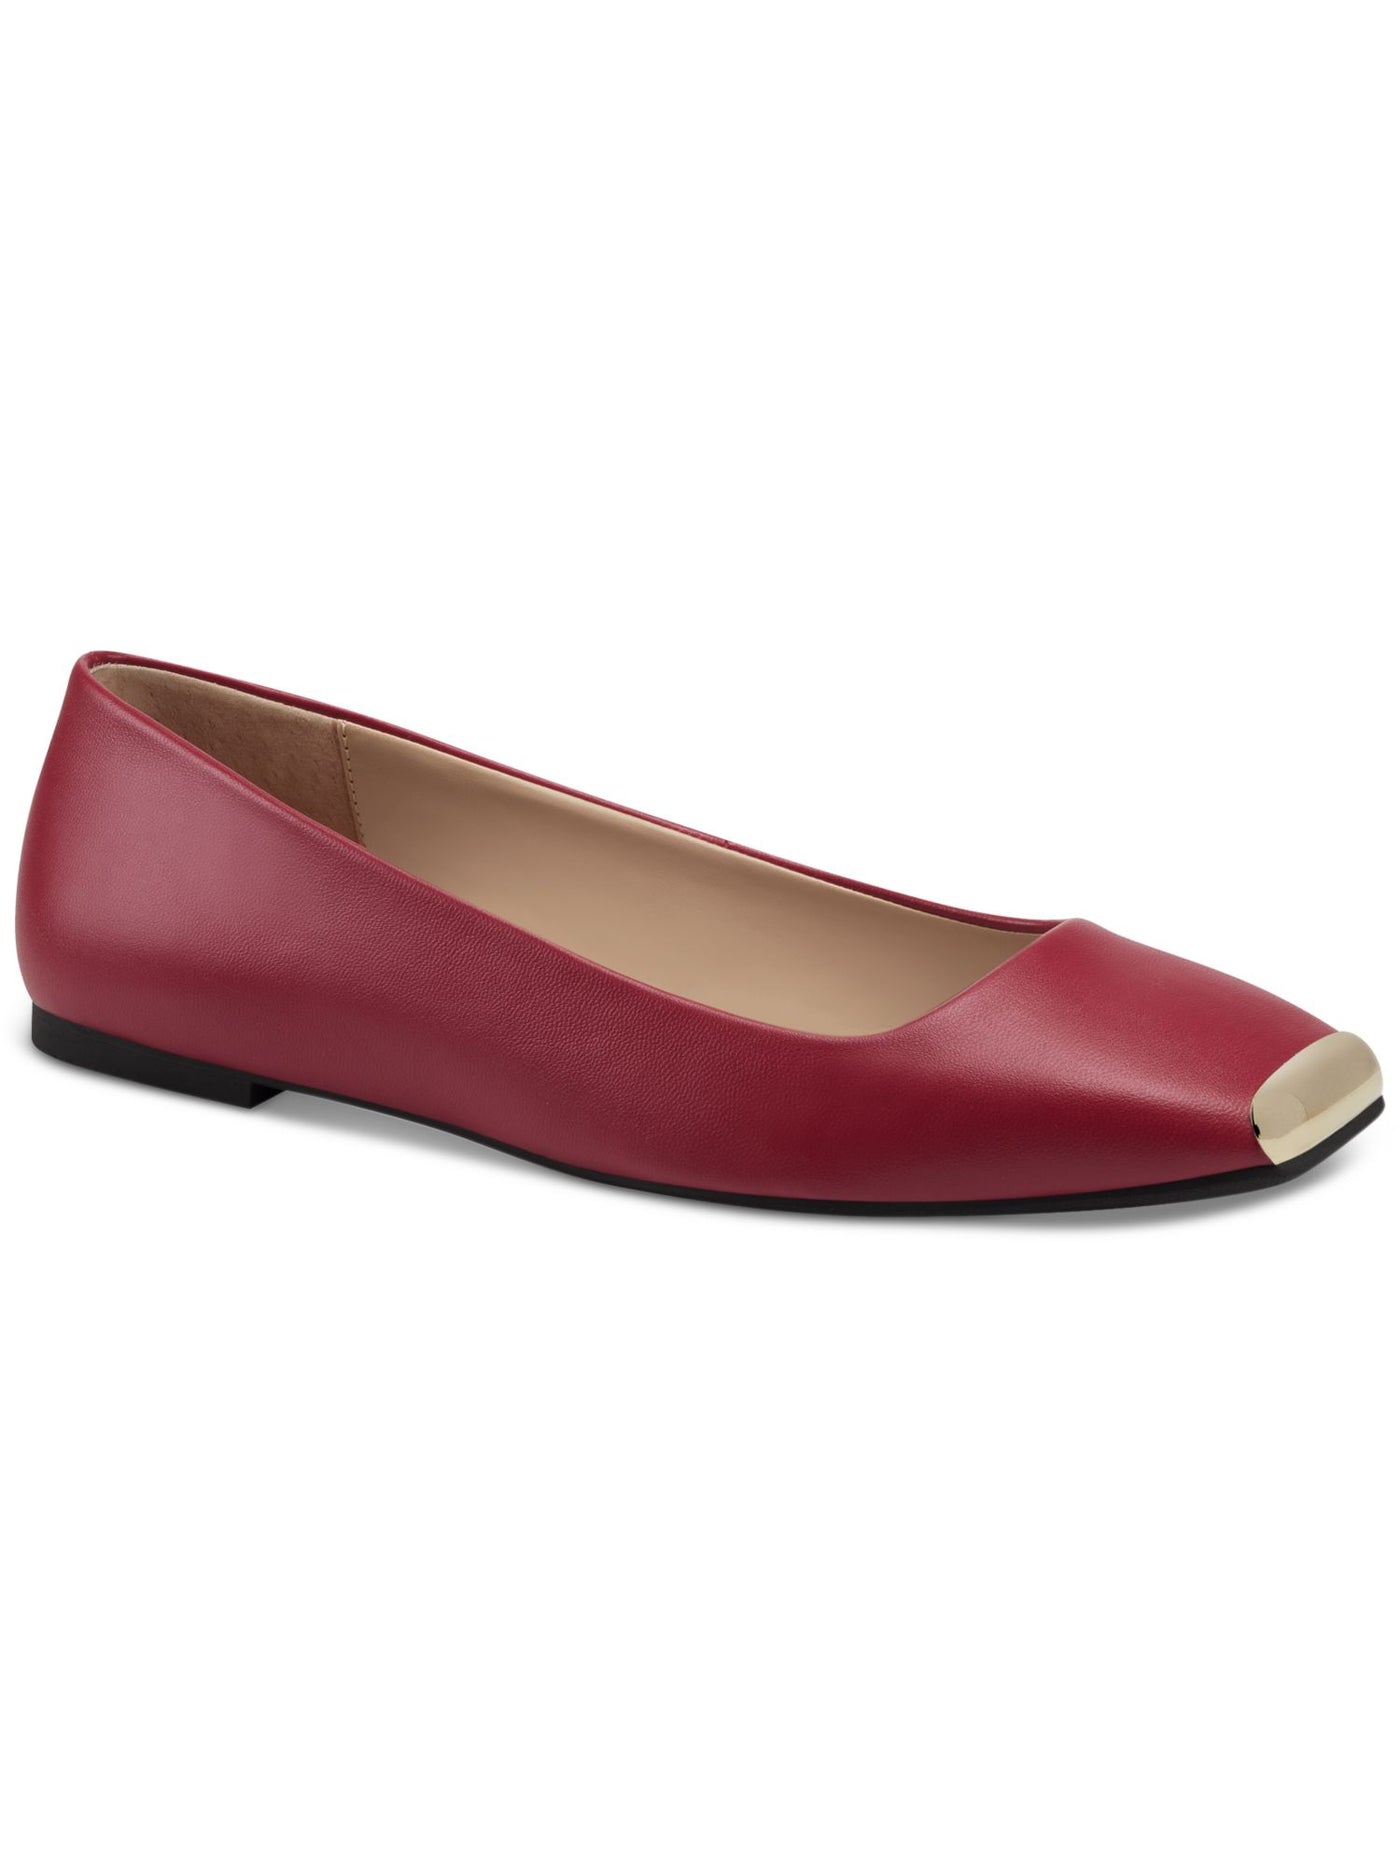 ALFANI Womens Red Flexible Sole Padded Metallic Neptoon Square Toe Block Heel Slip On Dress Flats Shoes 5 M